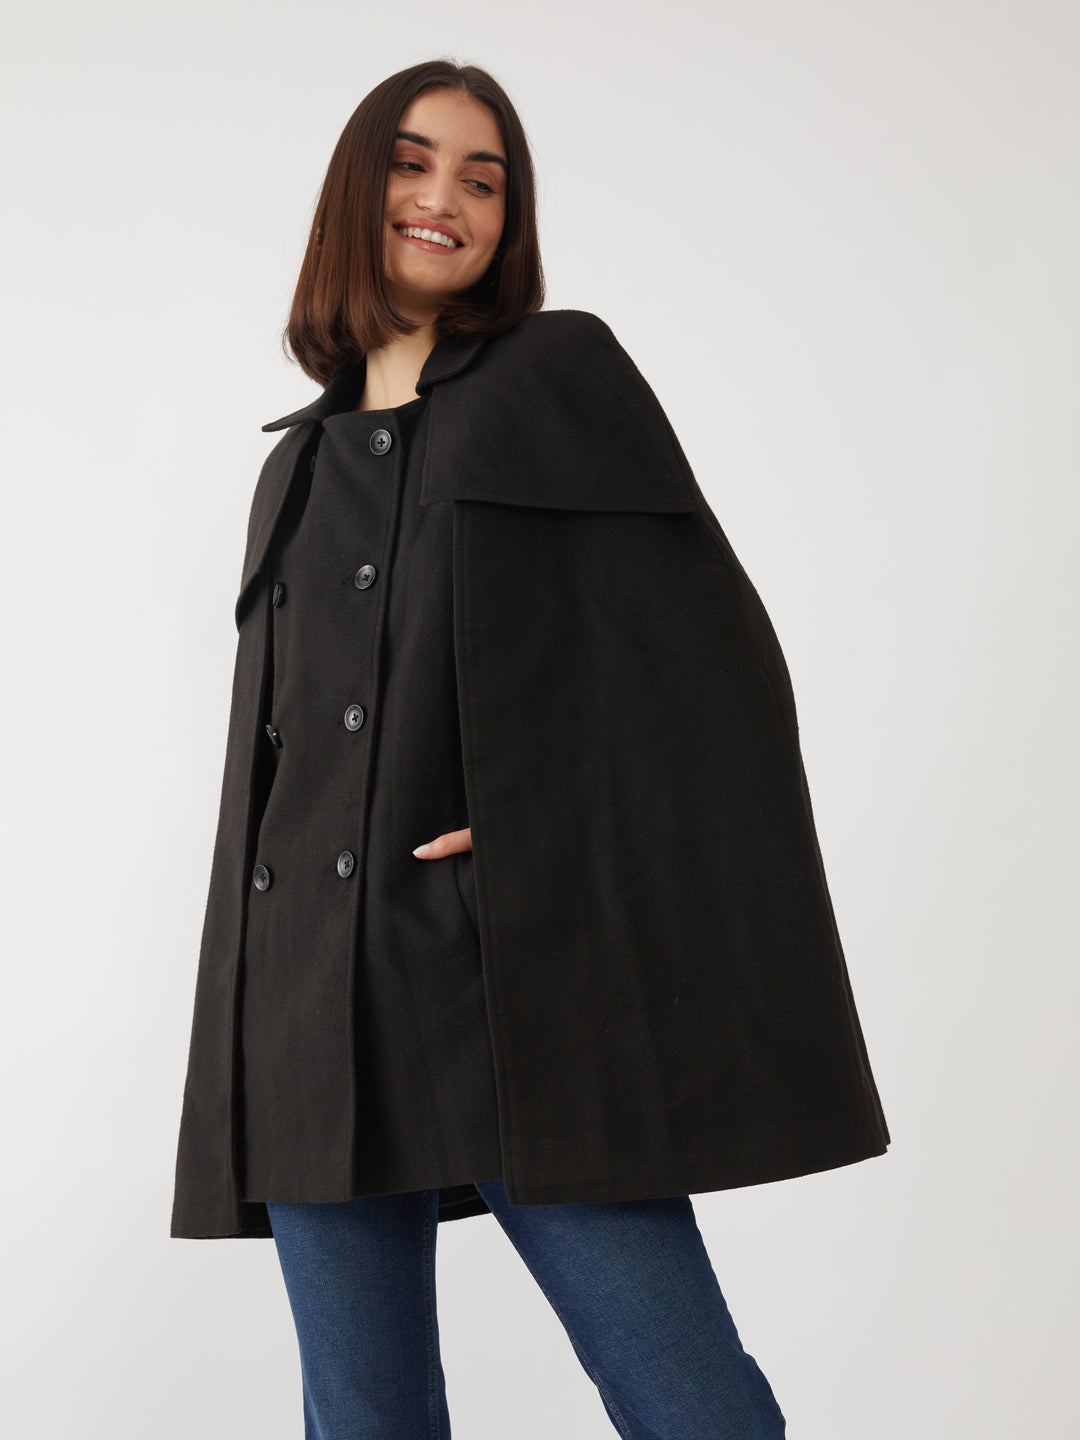 Black Solid Cape Coat For Women